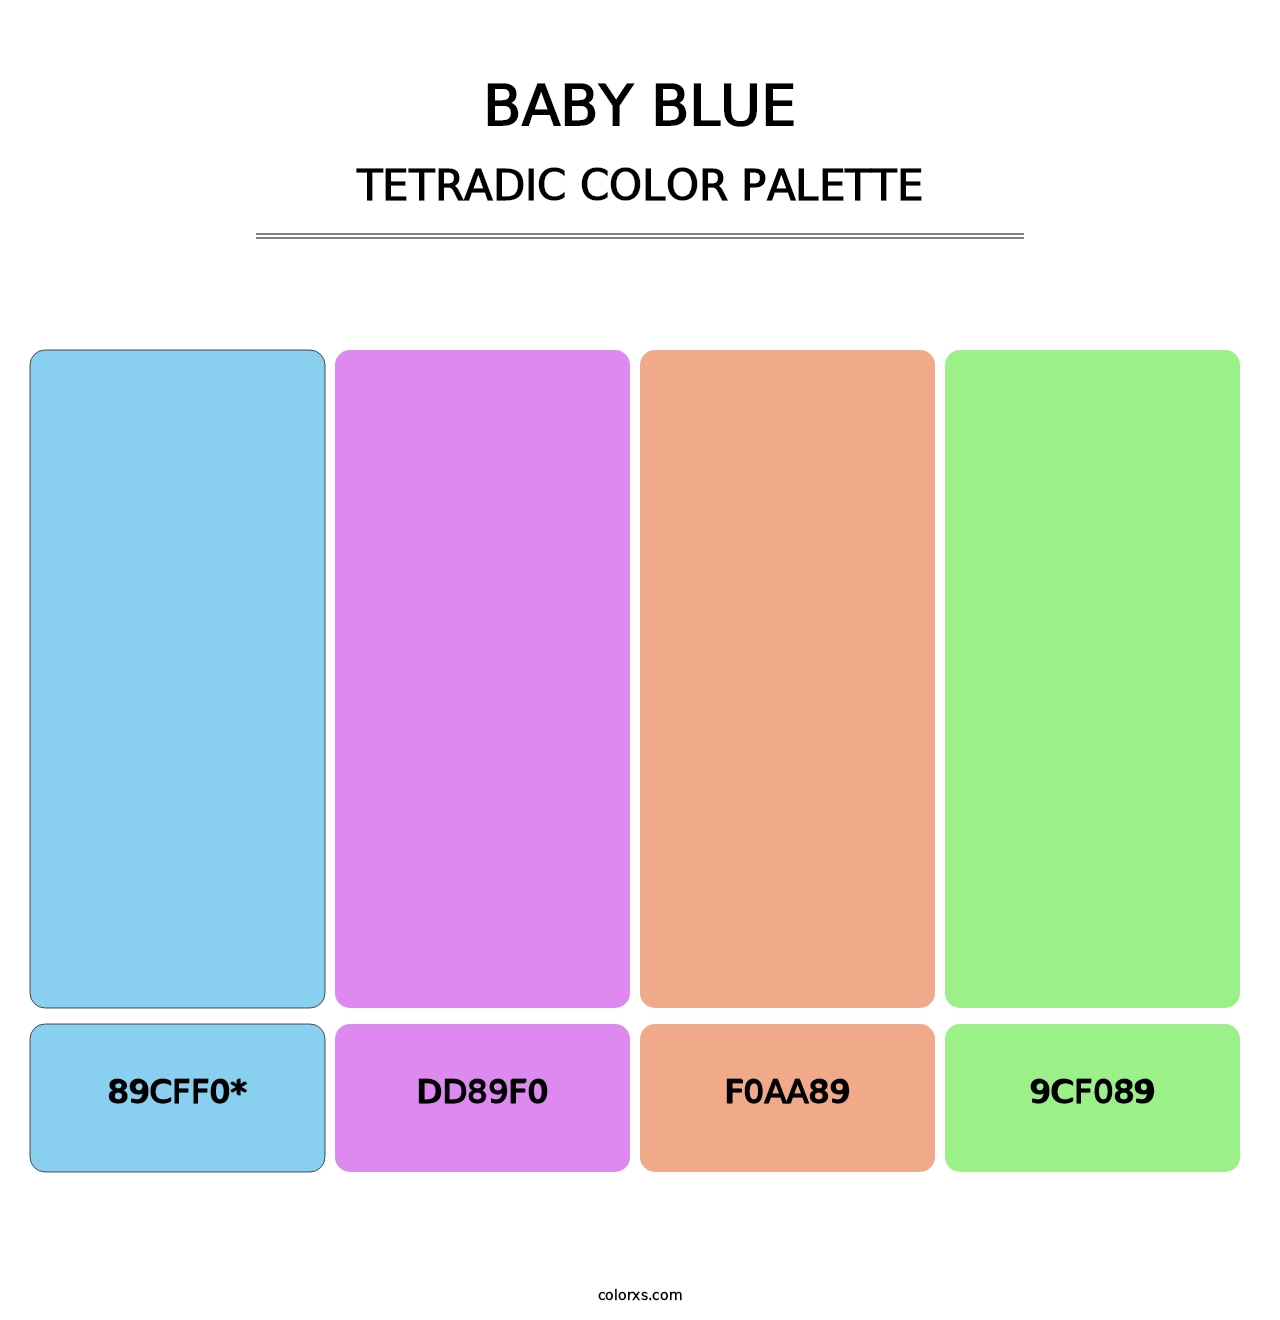 Baby Blue - Tetradic Color Palette